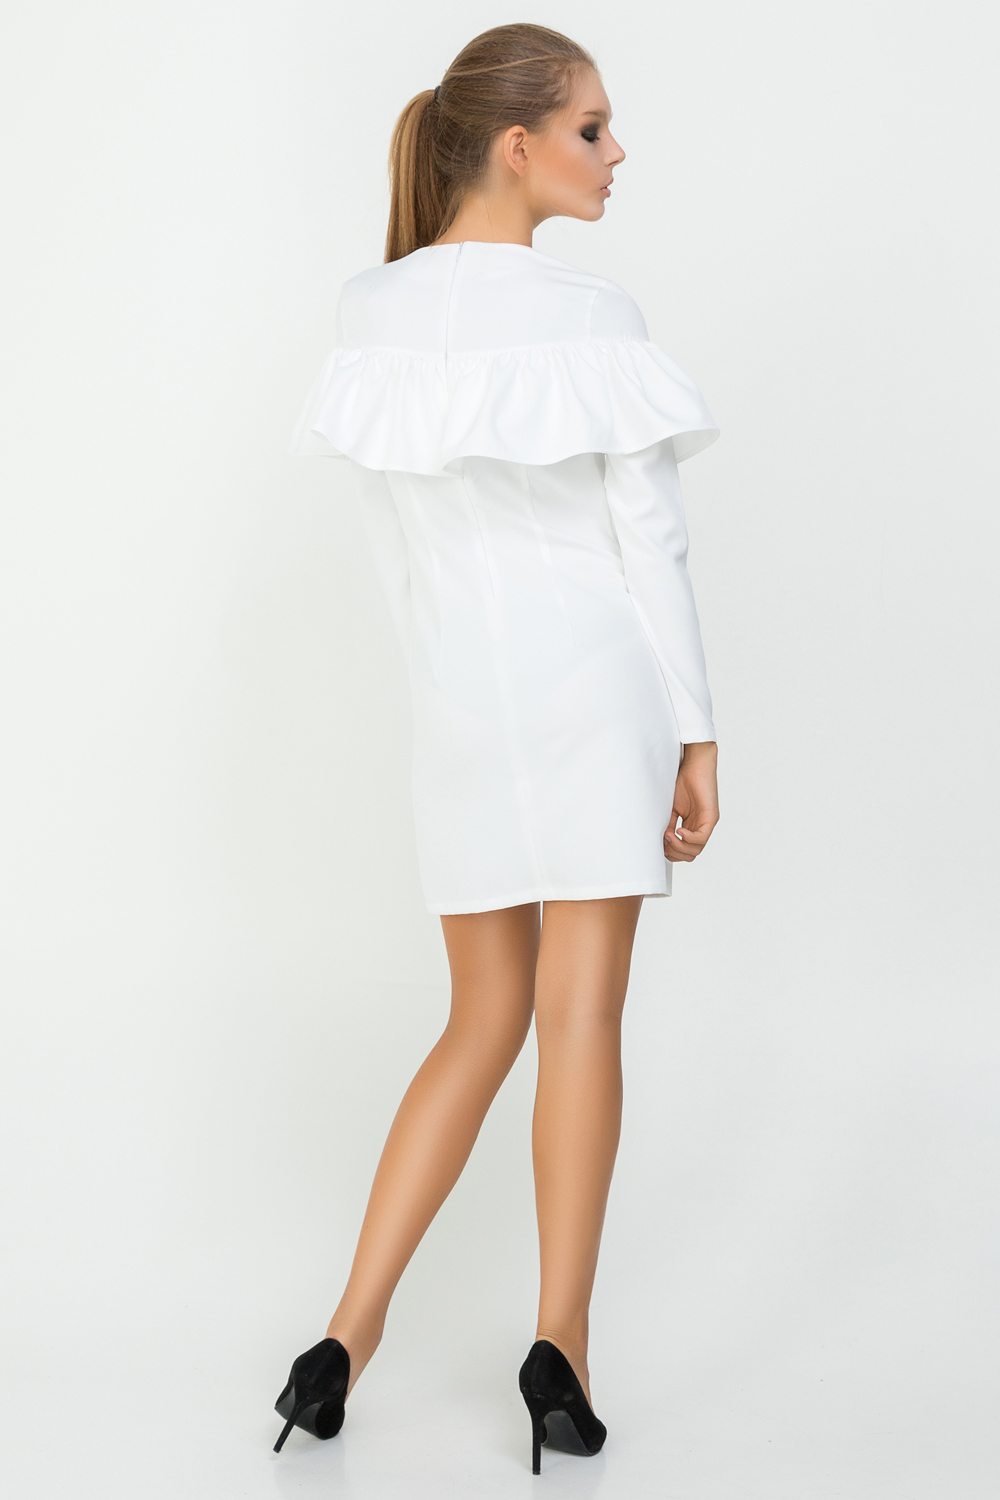 White pelerine dress